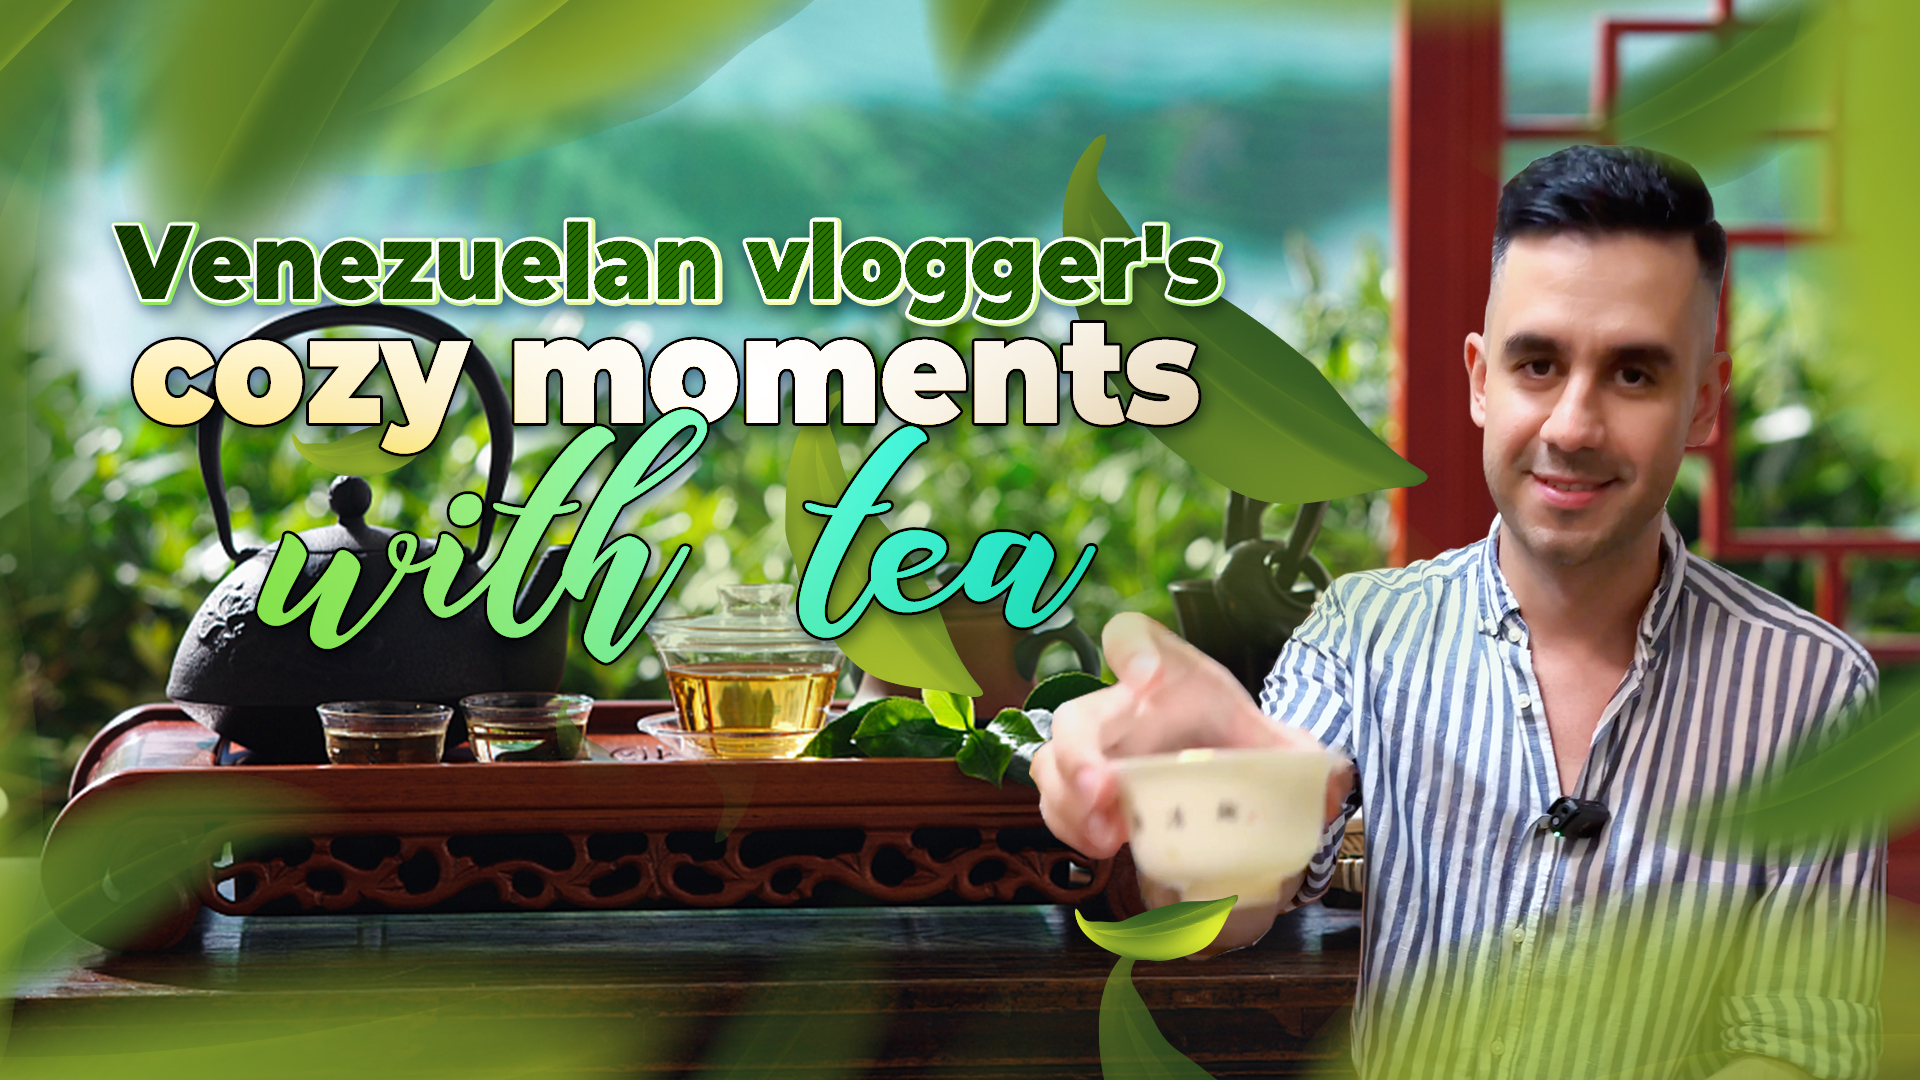 Venezuelan vlogger's cozy moments with tea